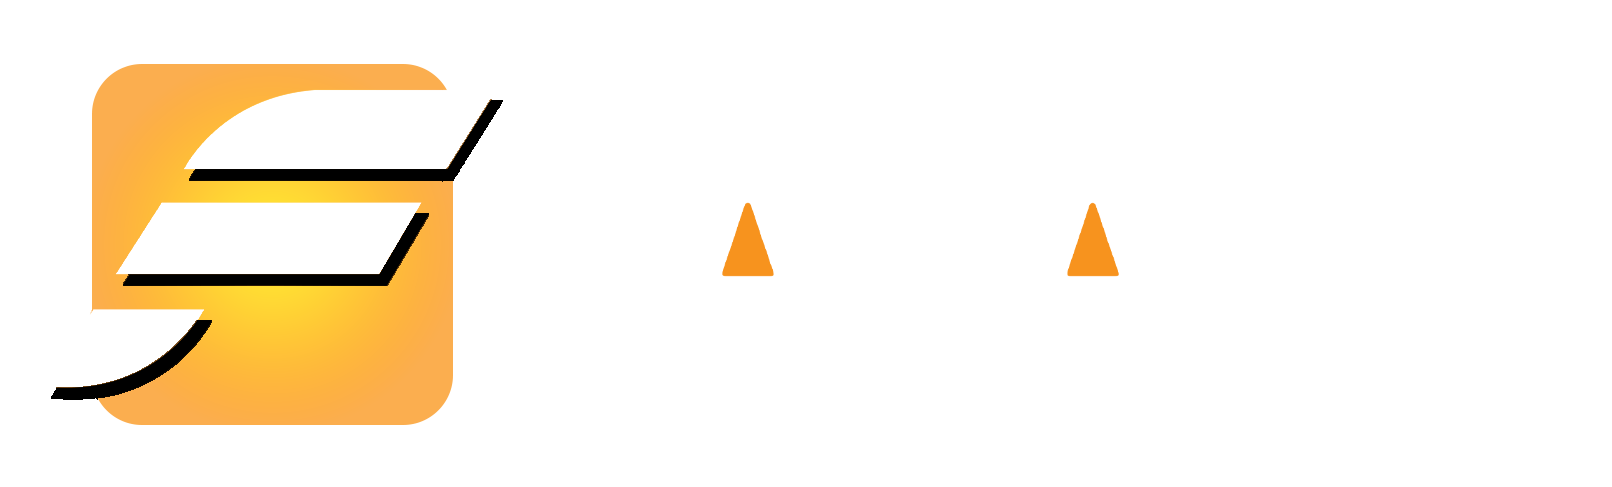 cropped-Logo-Fanatel-Horizonta-Sem-Fundo-Branca.png